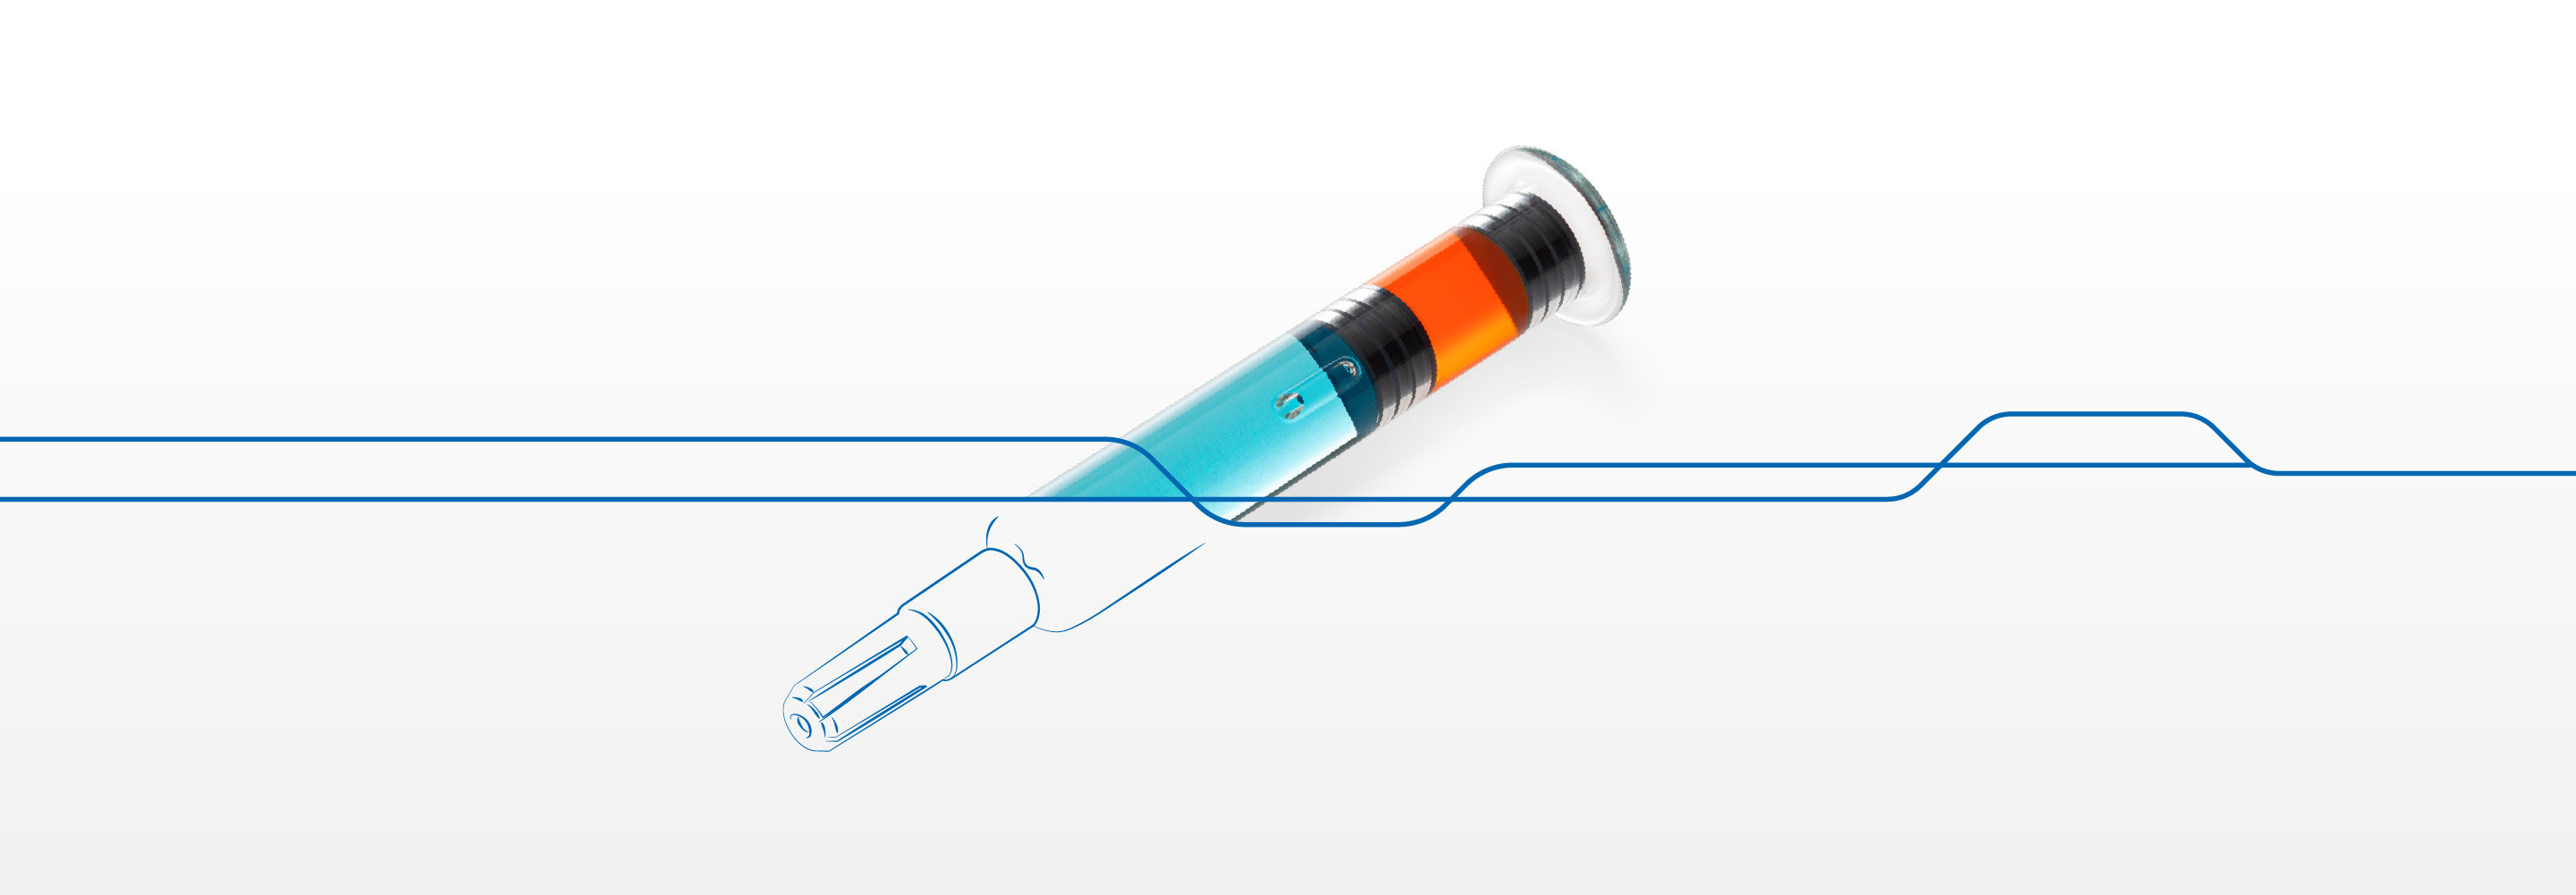 bypass syringe RNS illustration